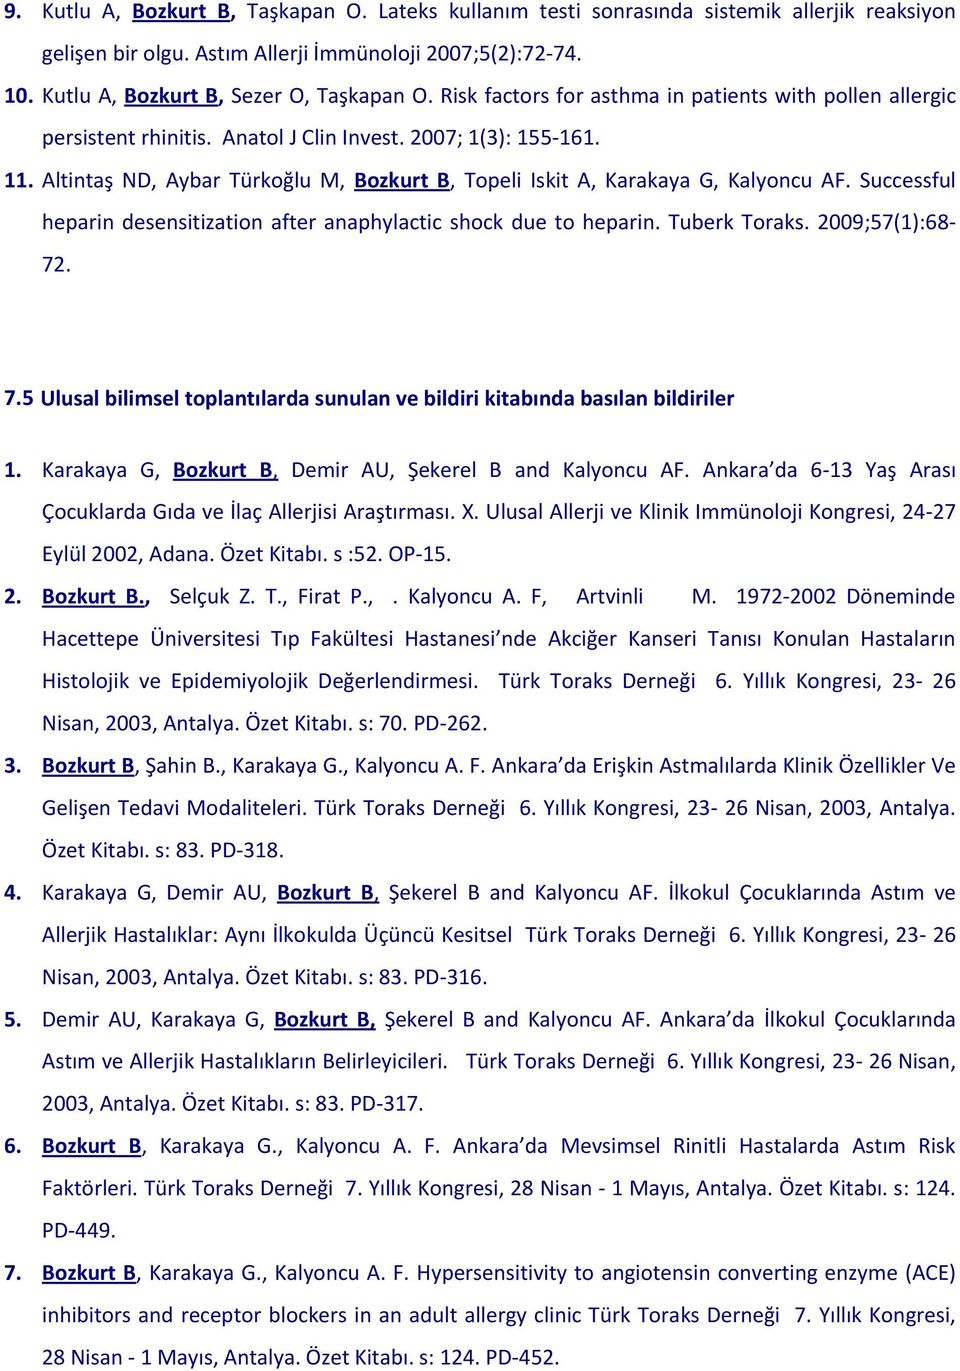 Altintaş ND, Aybar Türkoğlu M, Bozkurt B, Topeli Iskit A, Karakaya G, Kalyoncu AF. Successful heparin desensitization after anaphylactic shock due to heparin. Tuberk Toraks. 2009;57(1):68-72. 7.